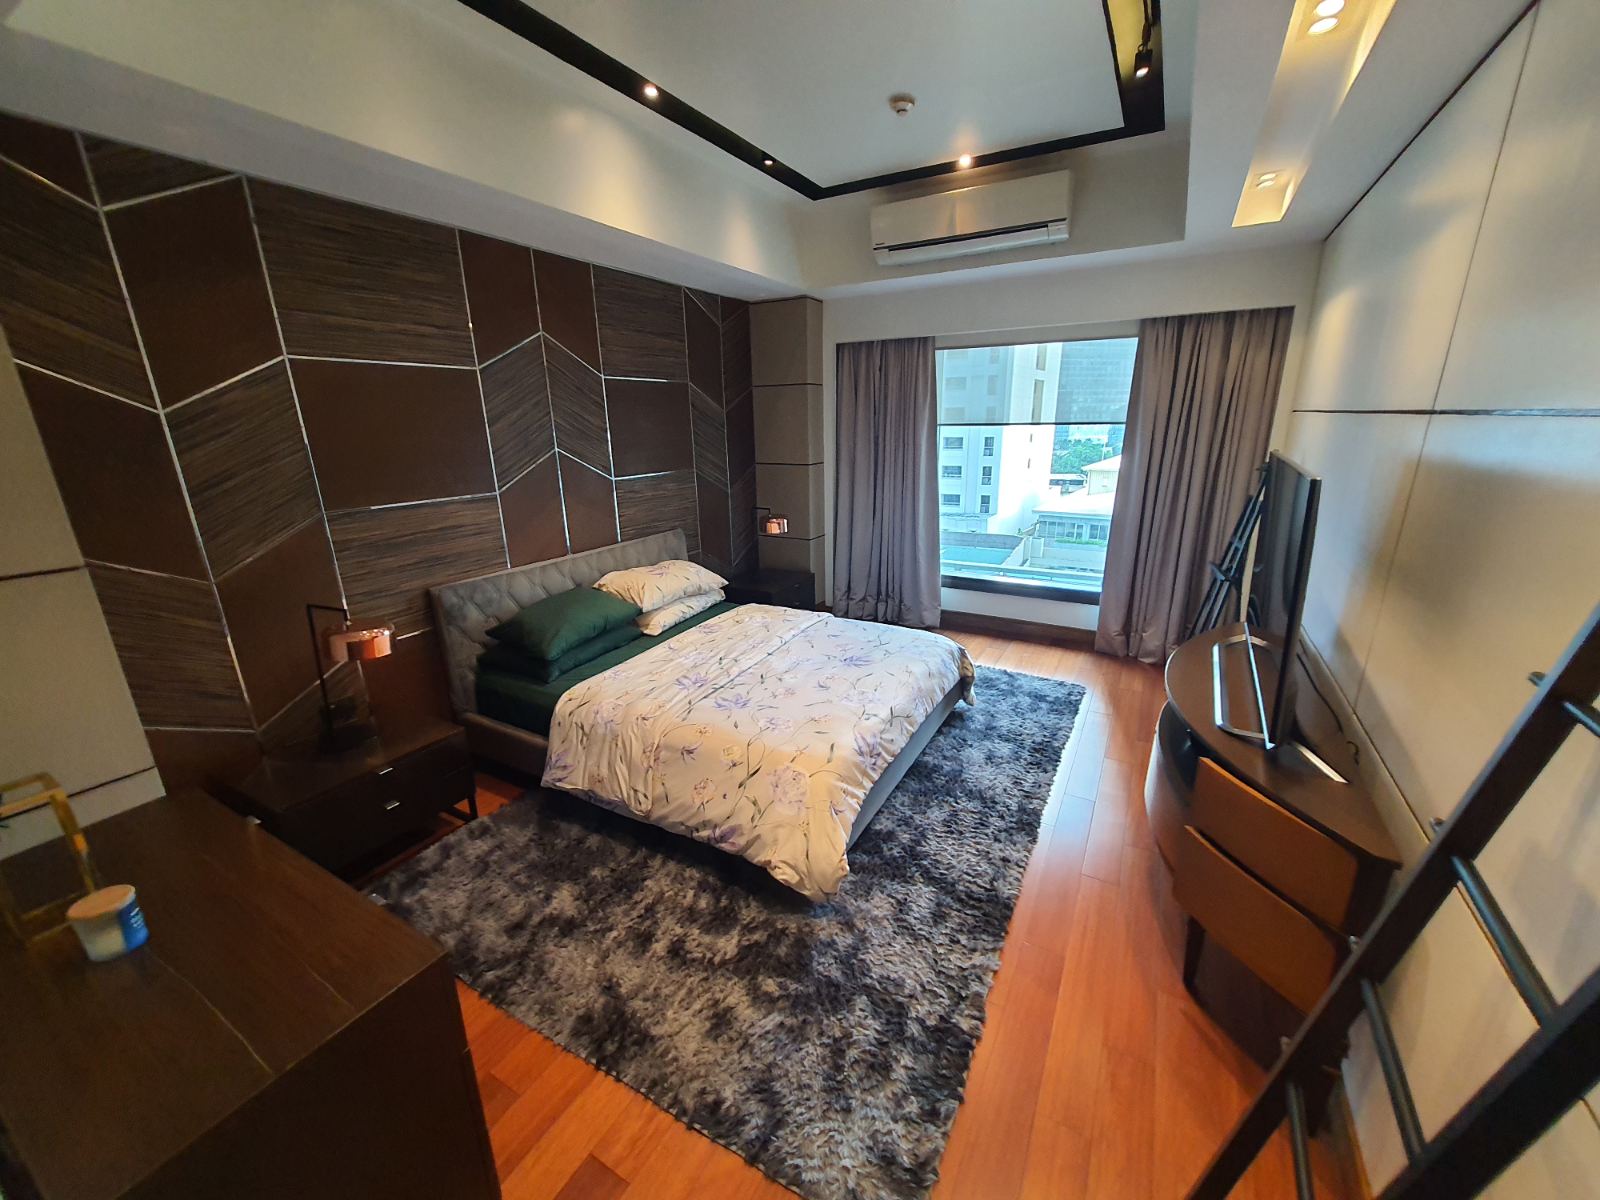 Condo For Rent in Legazpi Village 2 Bedrooms Pet friendly